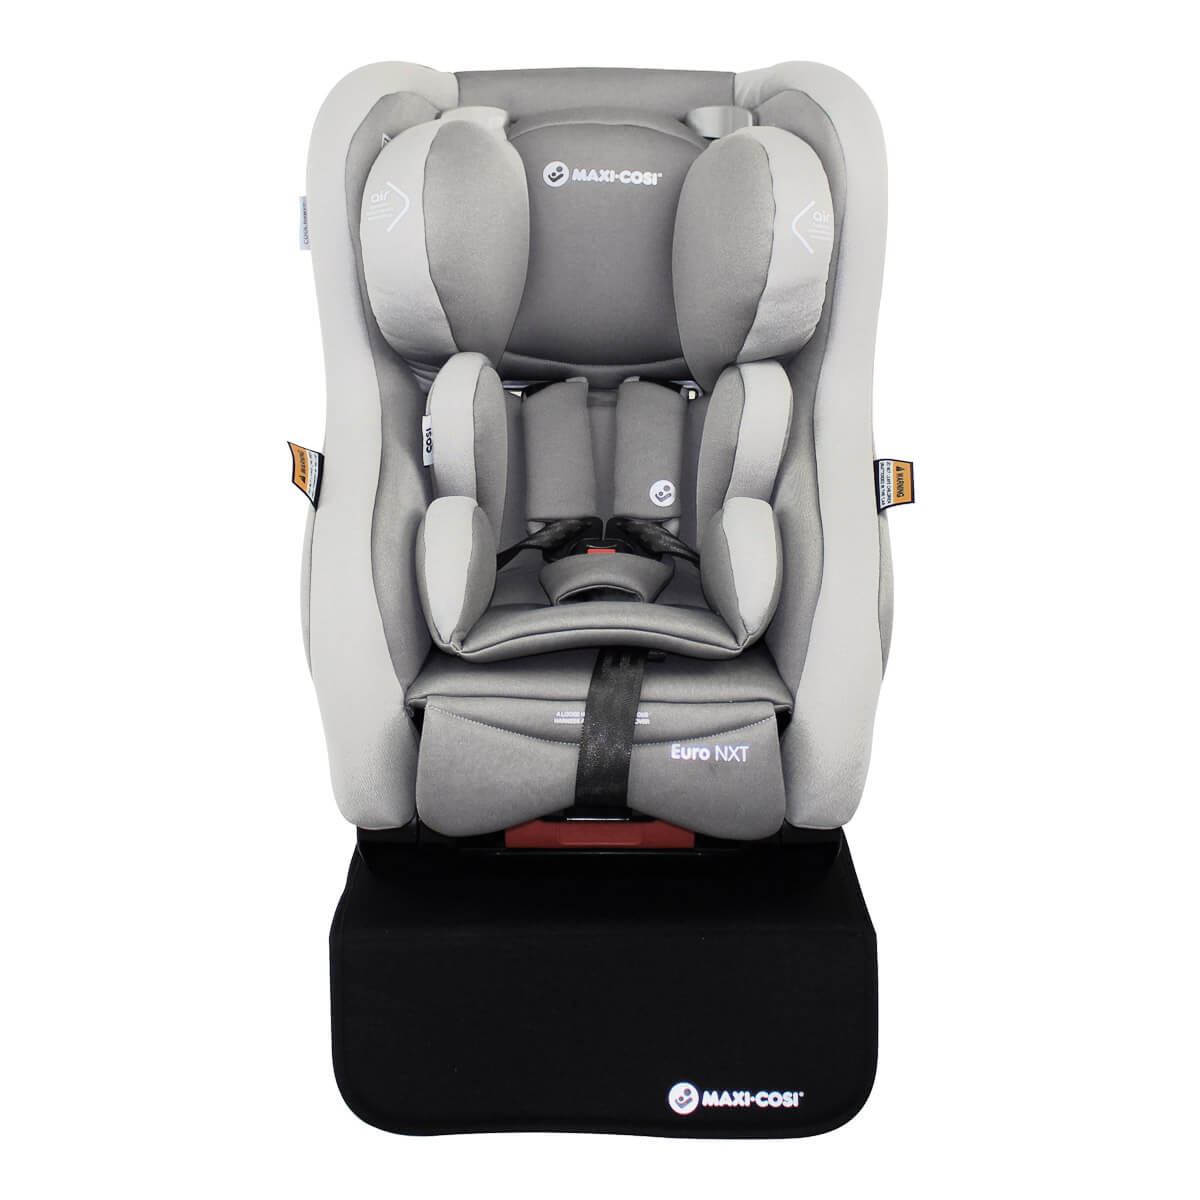 Maxi-Cosi Euro Nxt car seat in reward facing position